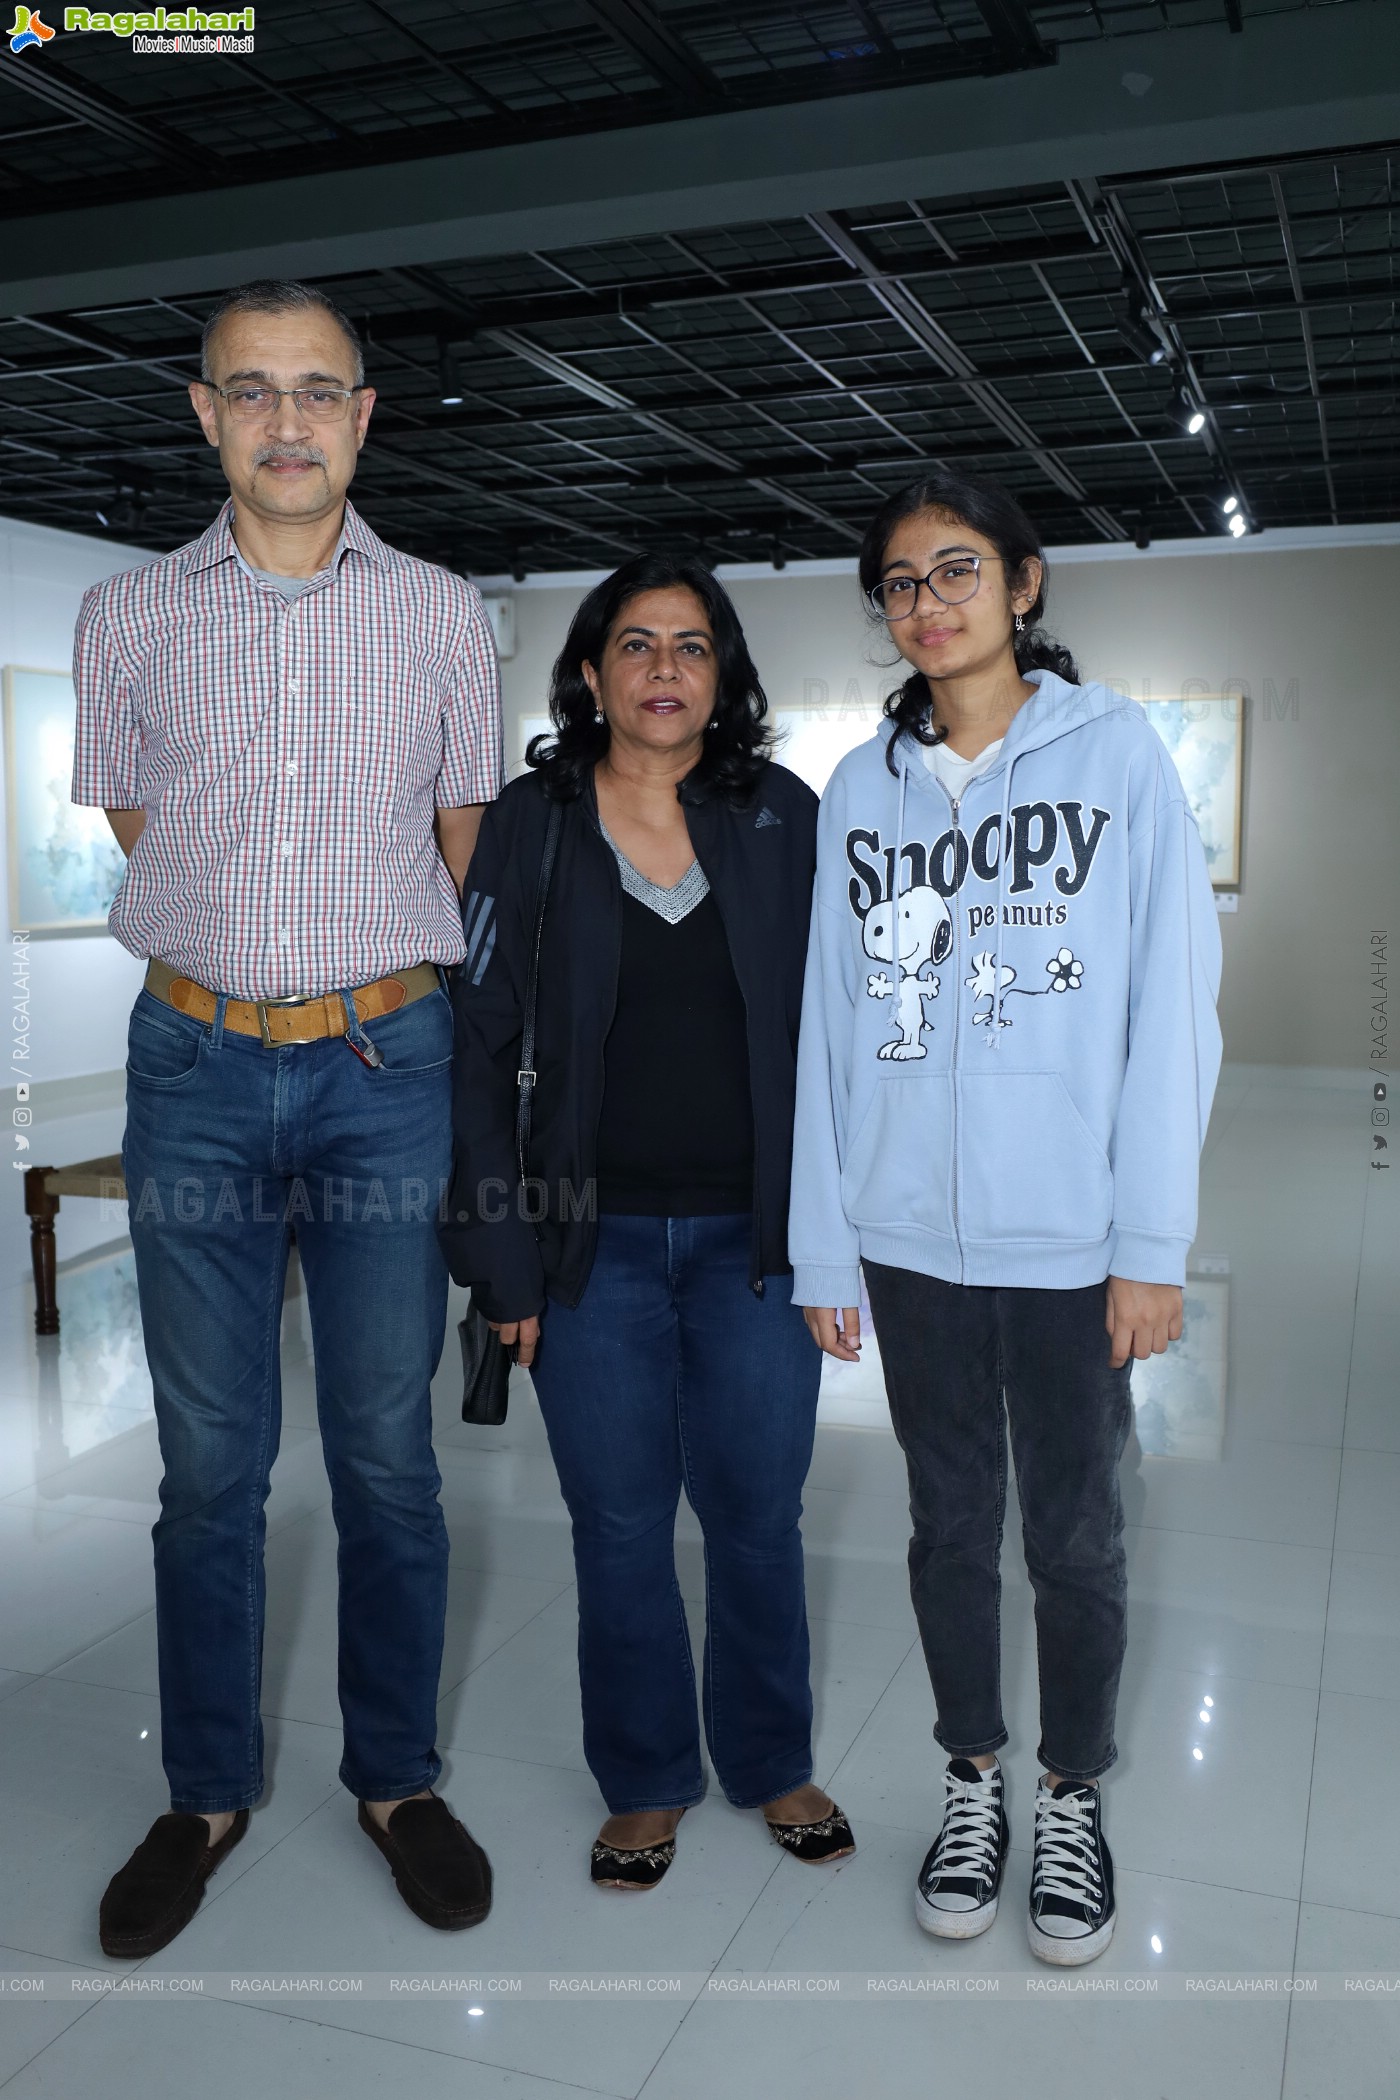 Kalakriti Art Gallery Presents 'Ways of Seeing' by Madhuri Kathe